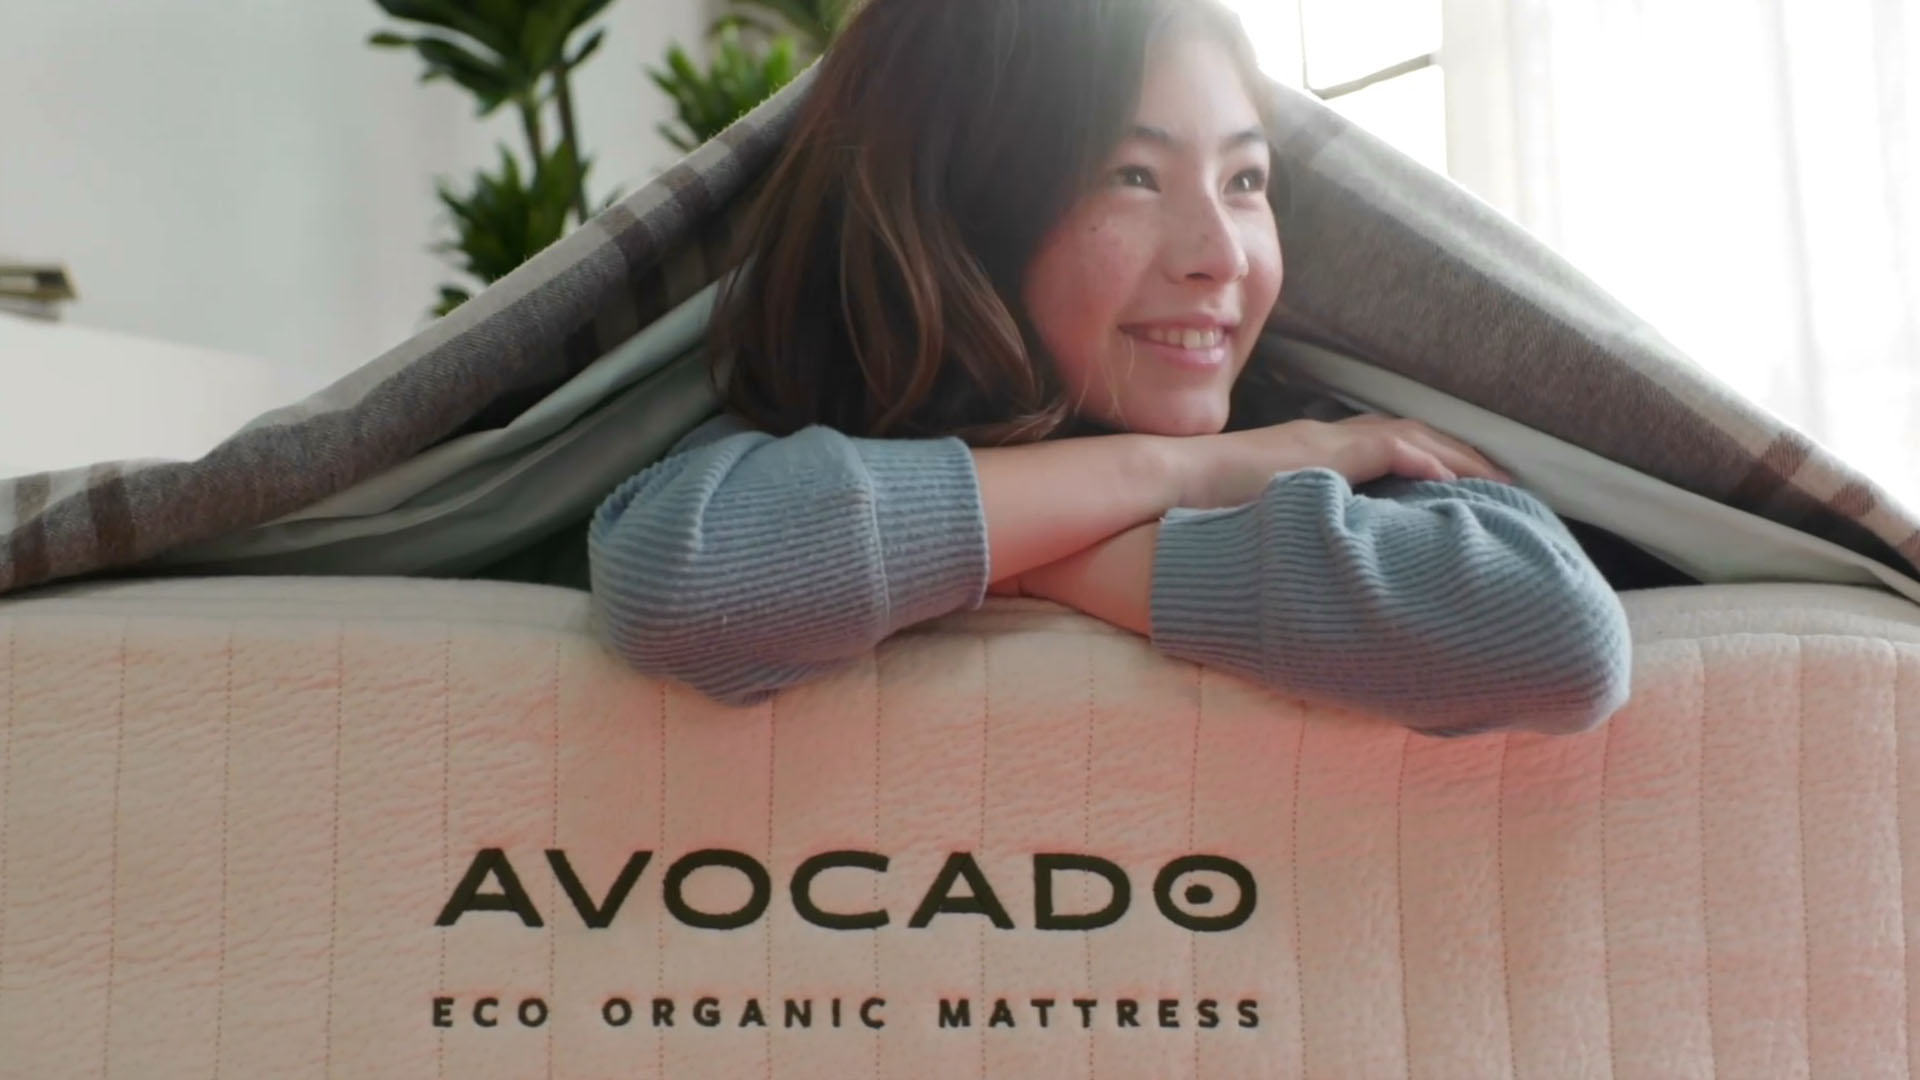 Who sells Avocado mattress near me in Yucaipa